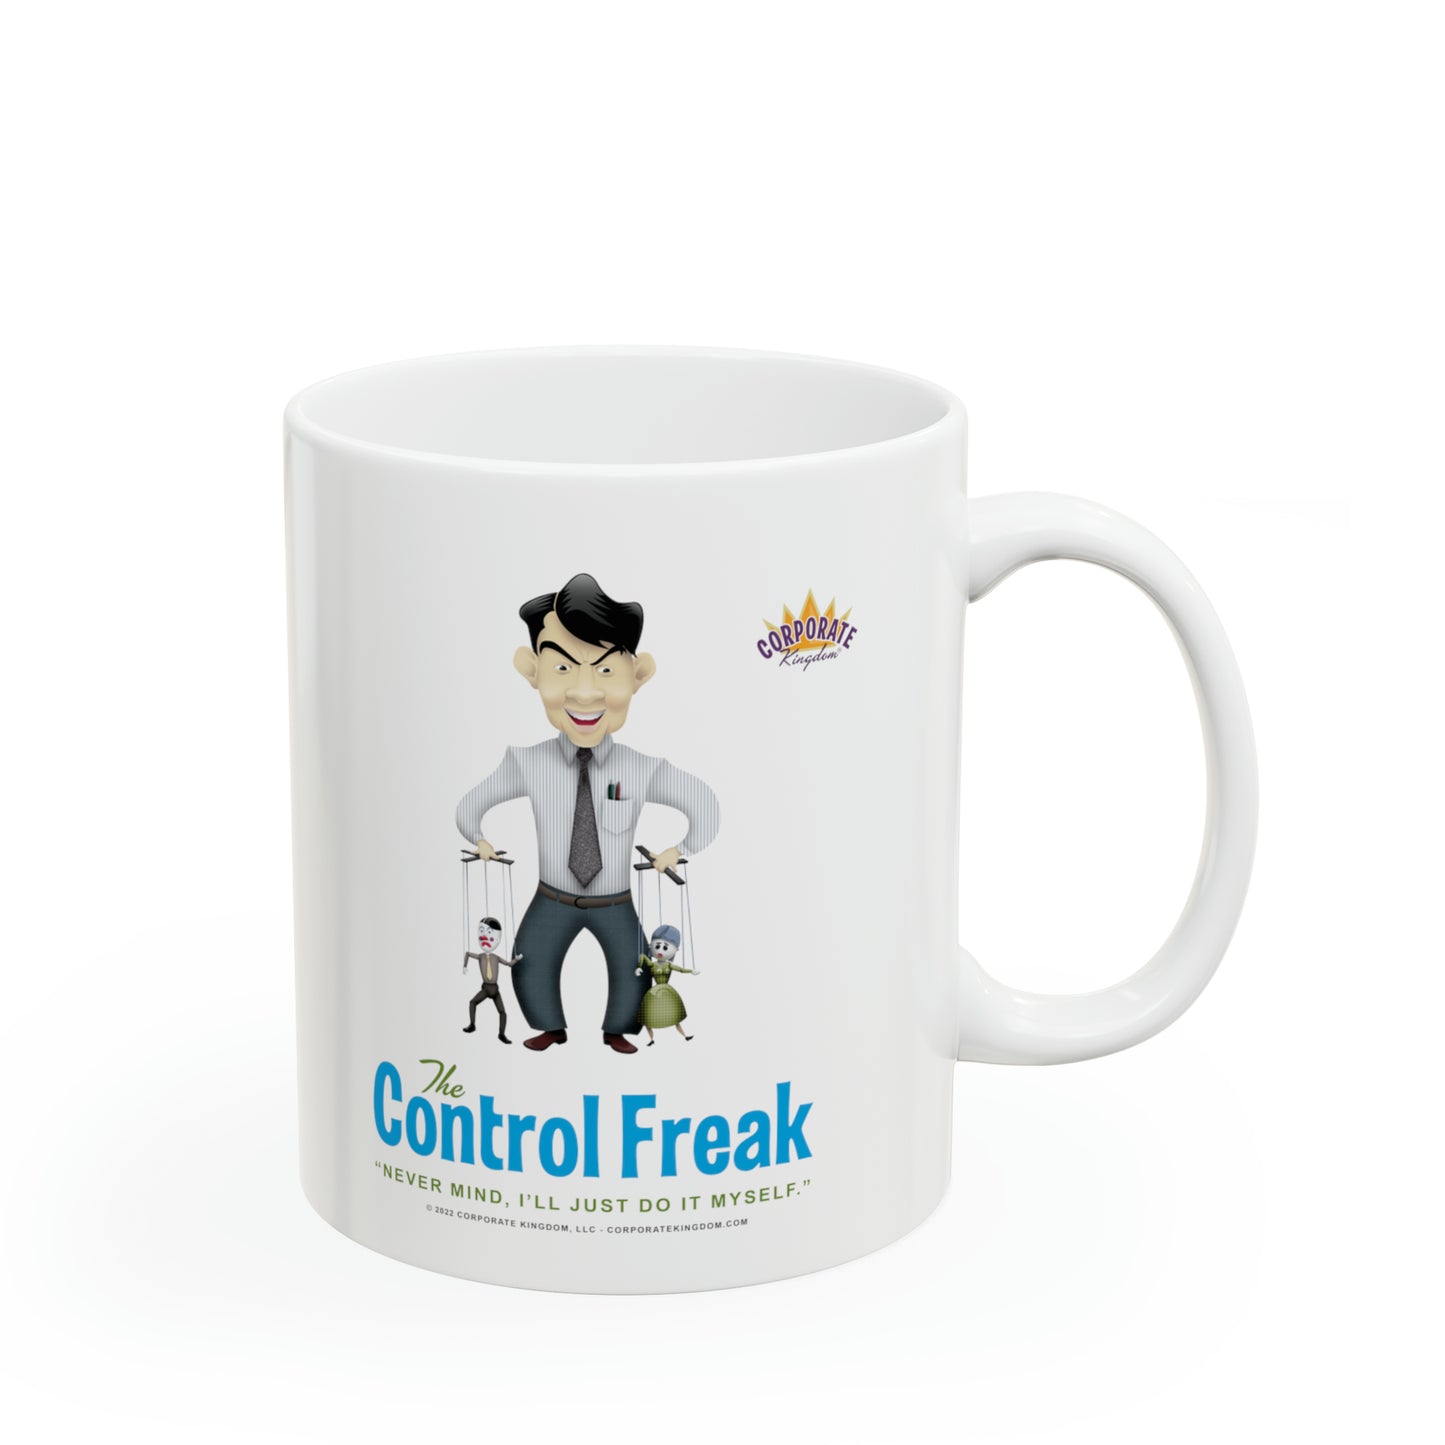 Control Freak Coffee Mug by Corporate Kingdom®